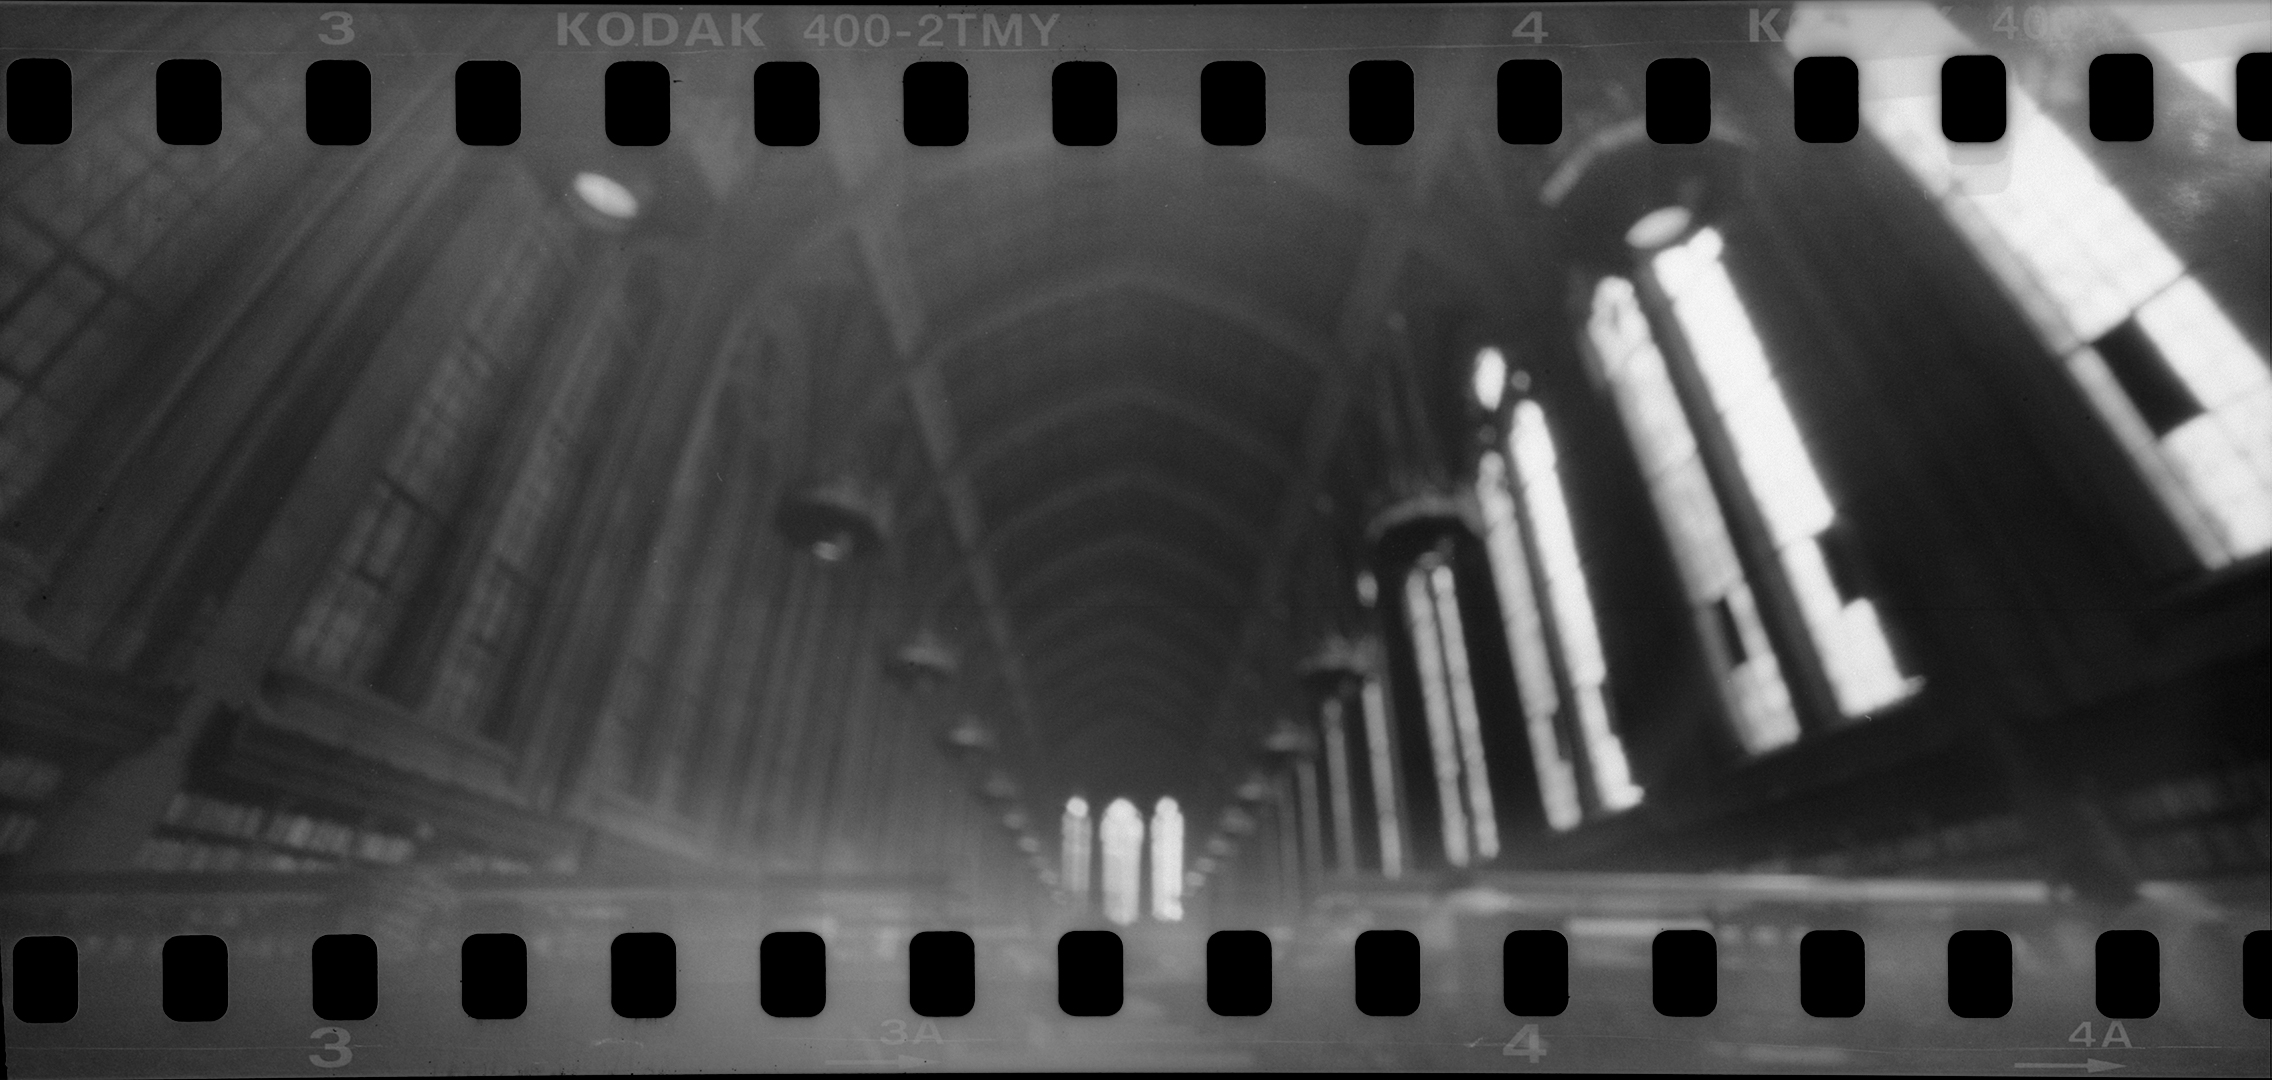  Suzzallo Library’s reading room. 30 second exposure. 